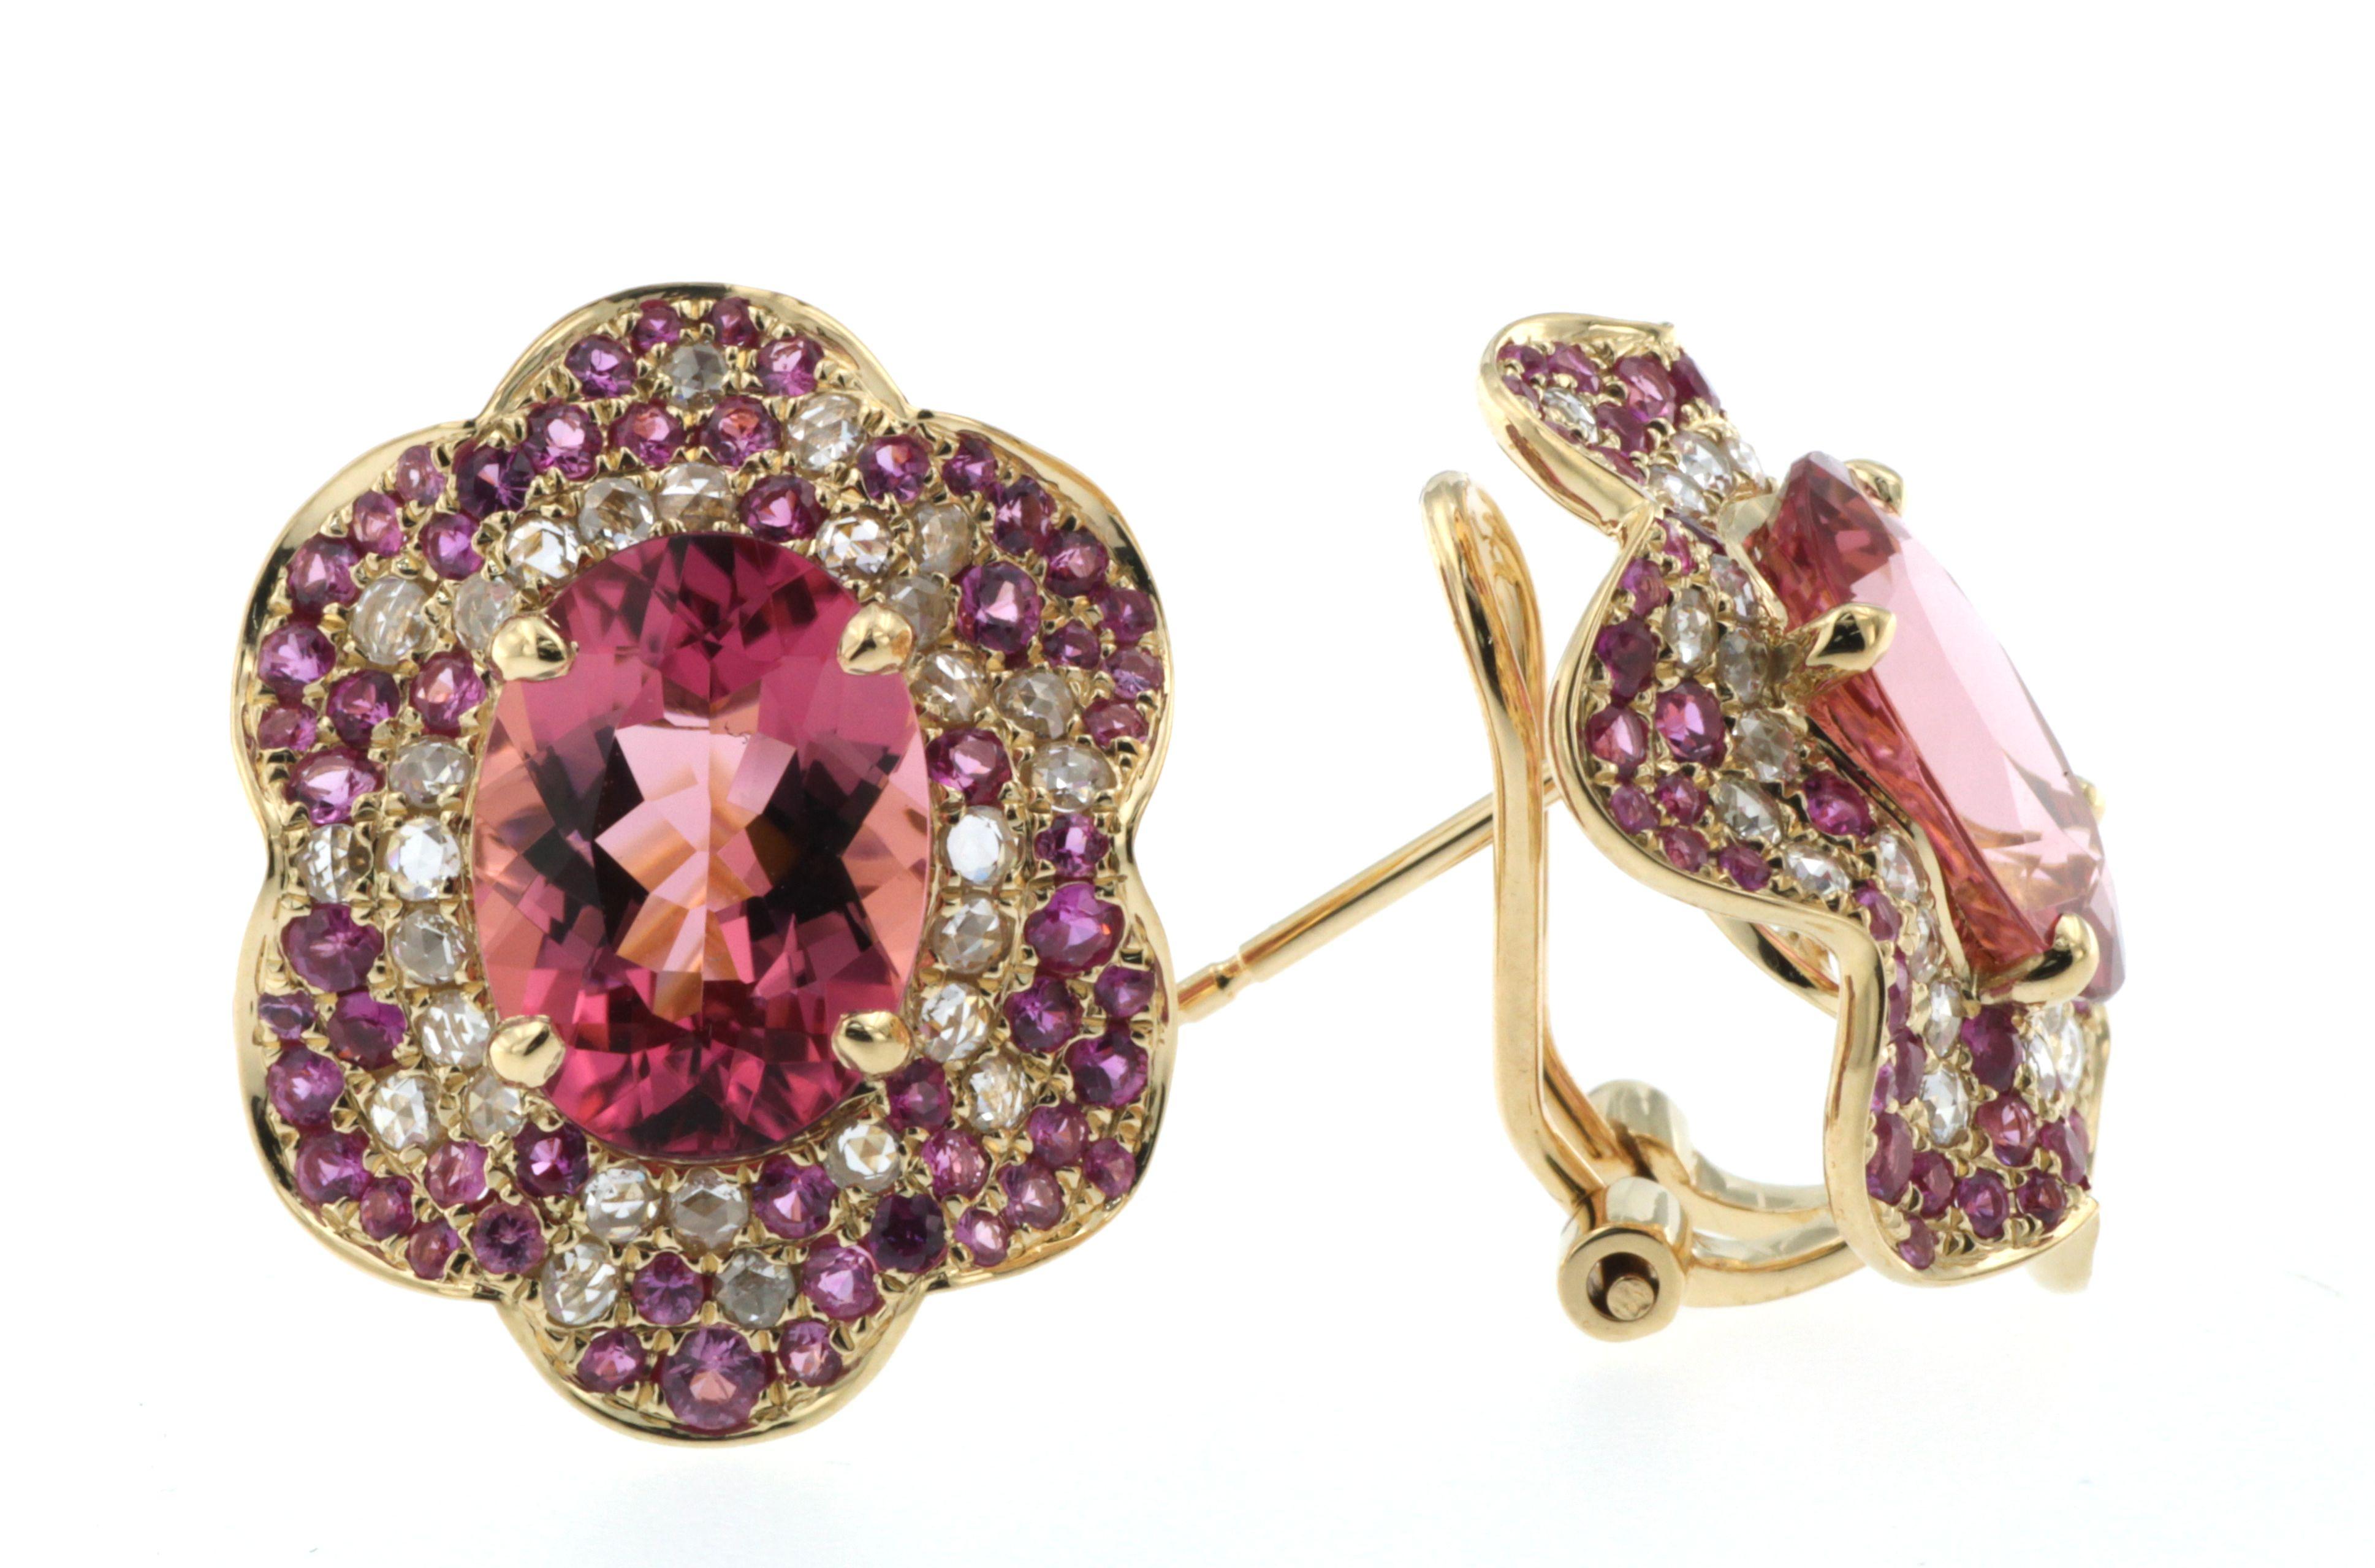 Oval Cut IGI CERTIFIED 5.18 Carat Pink Rubellite Tourmaline Diamond Ruby Earrings For Sale